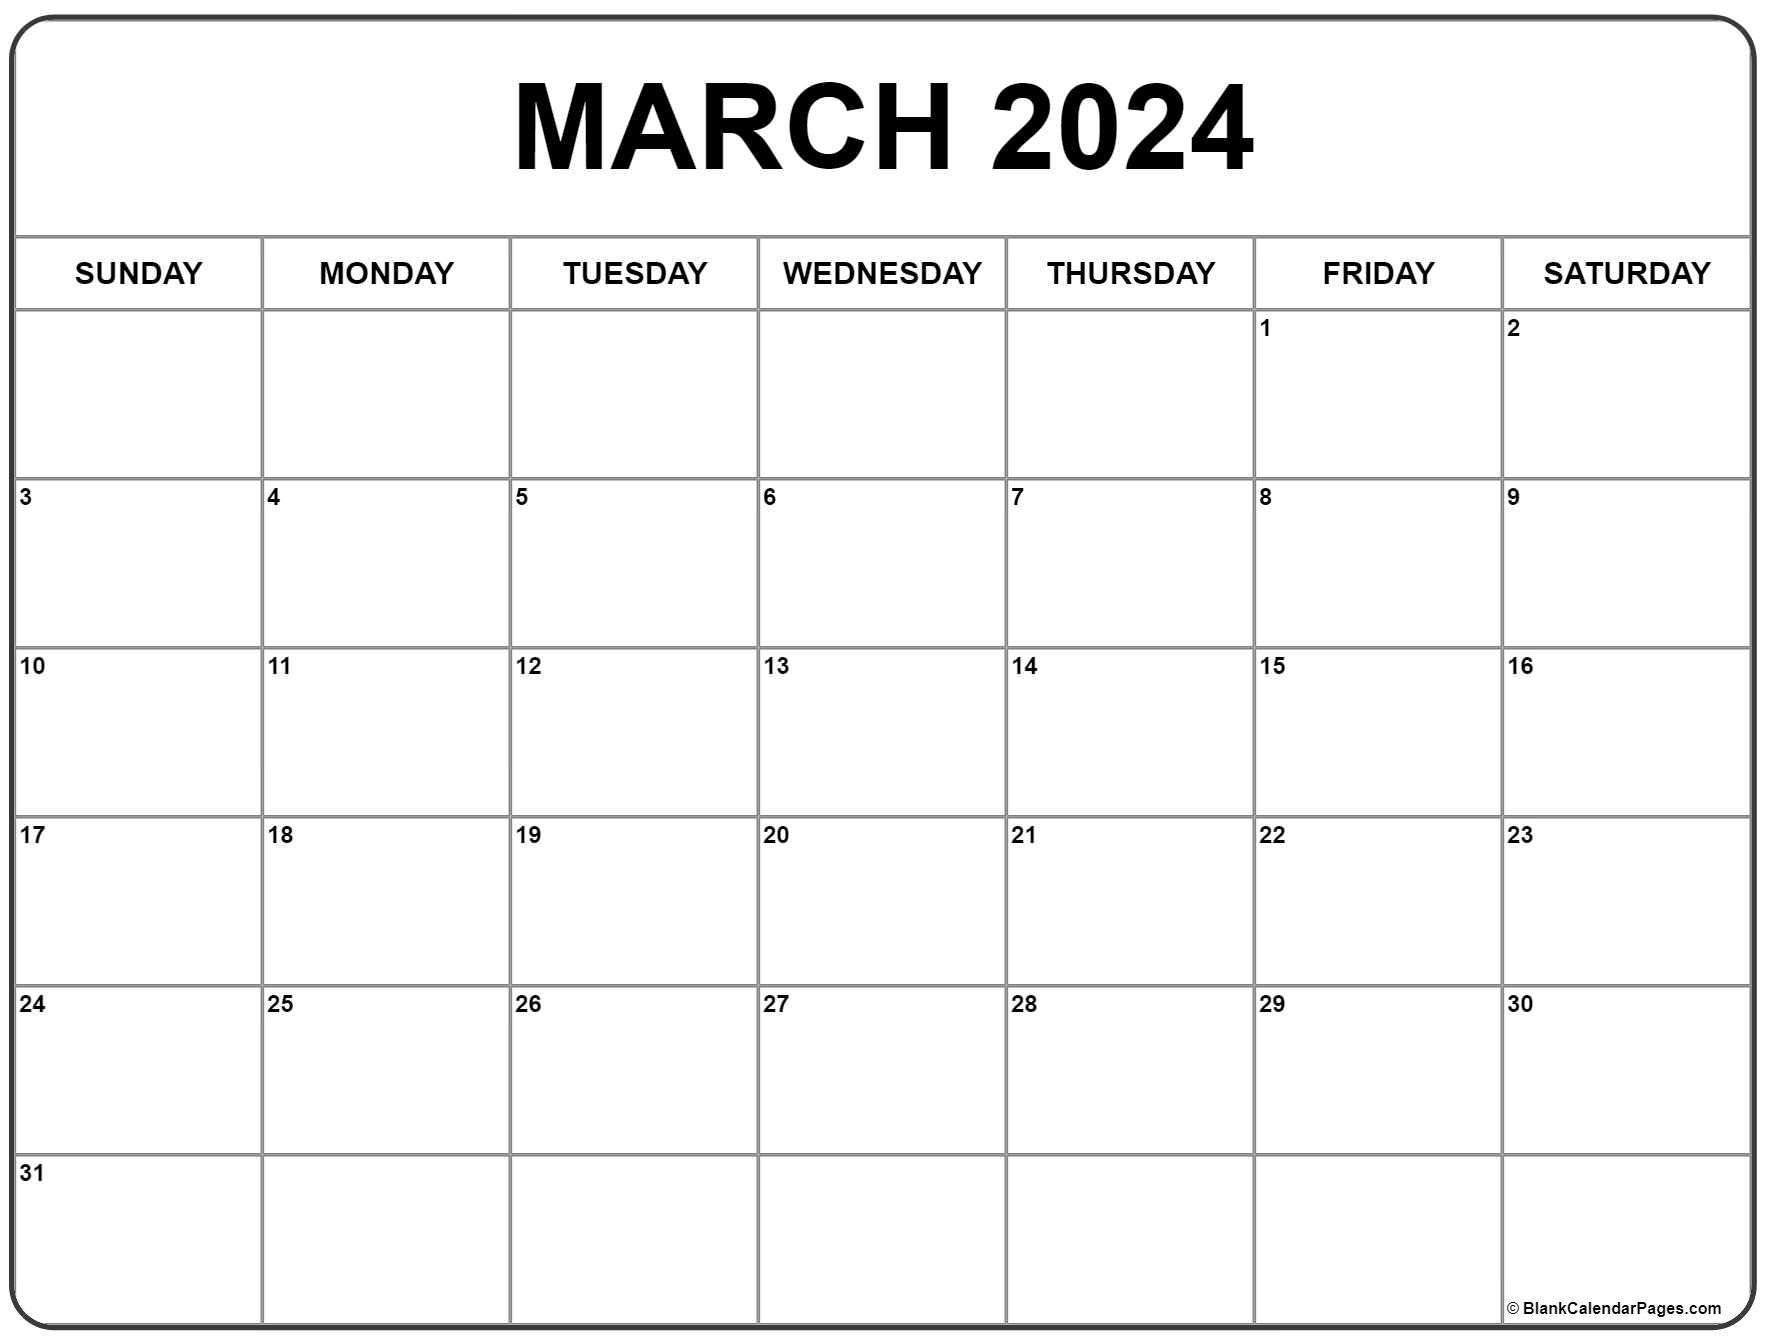 wiki-calendar-march-2023-2023